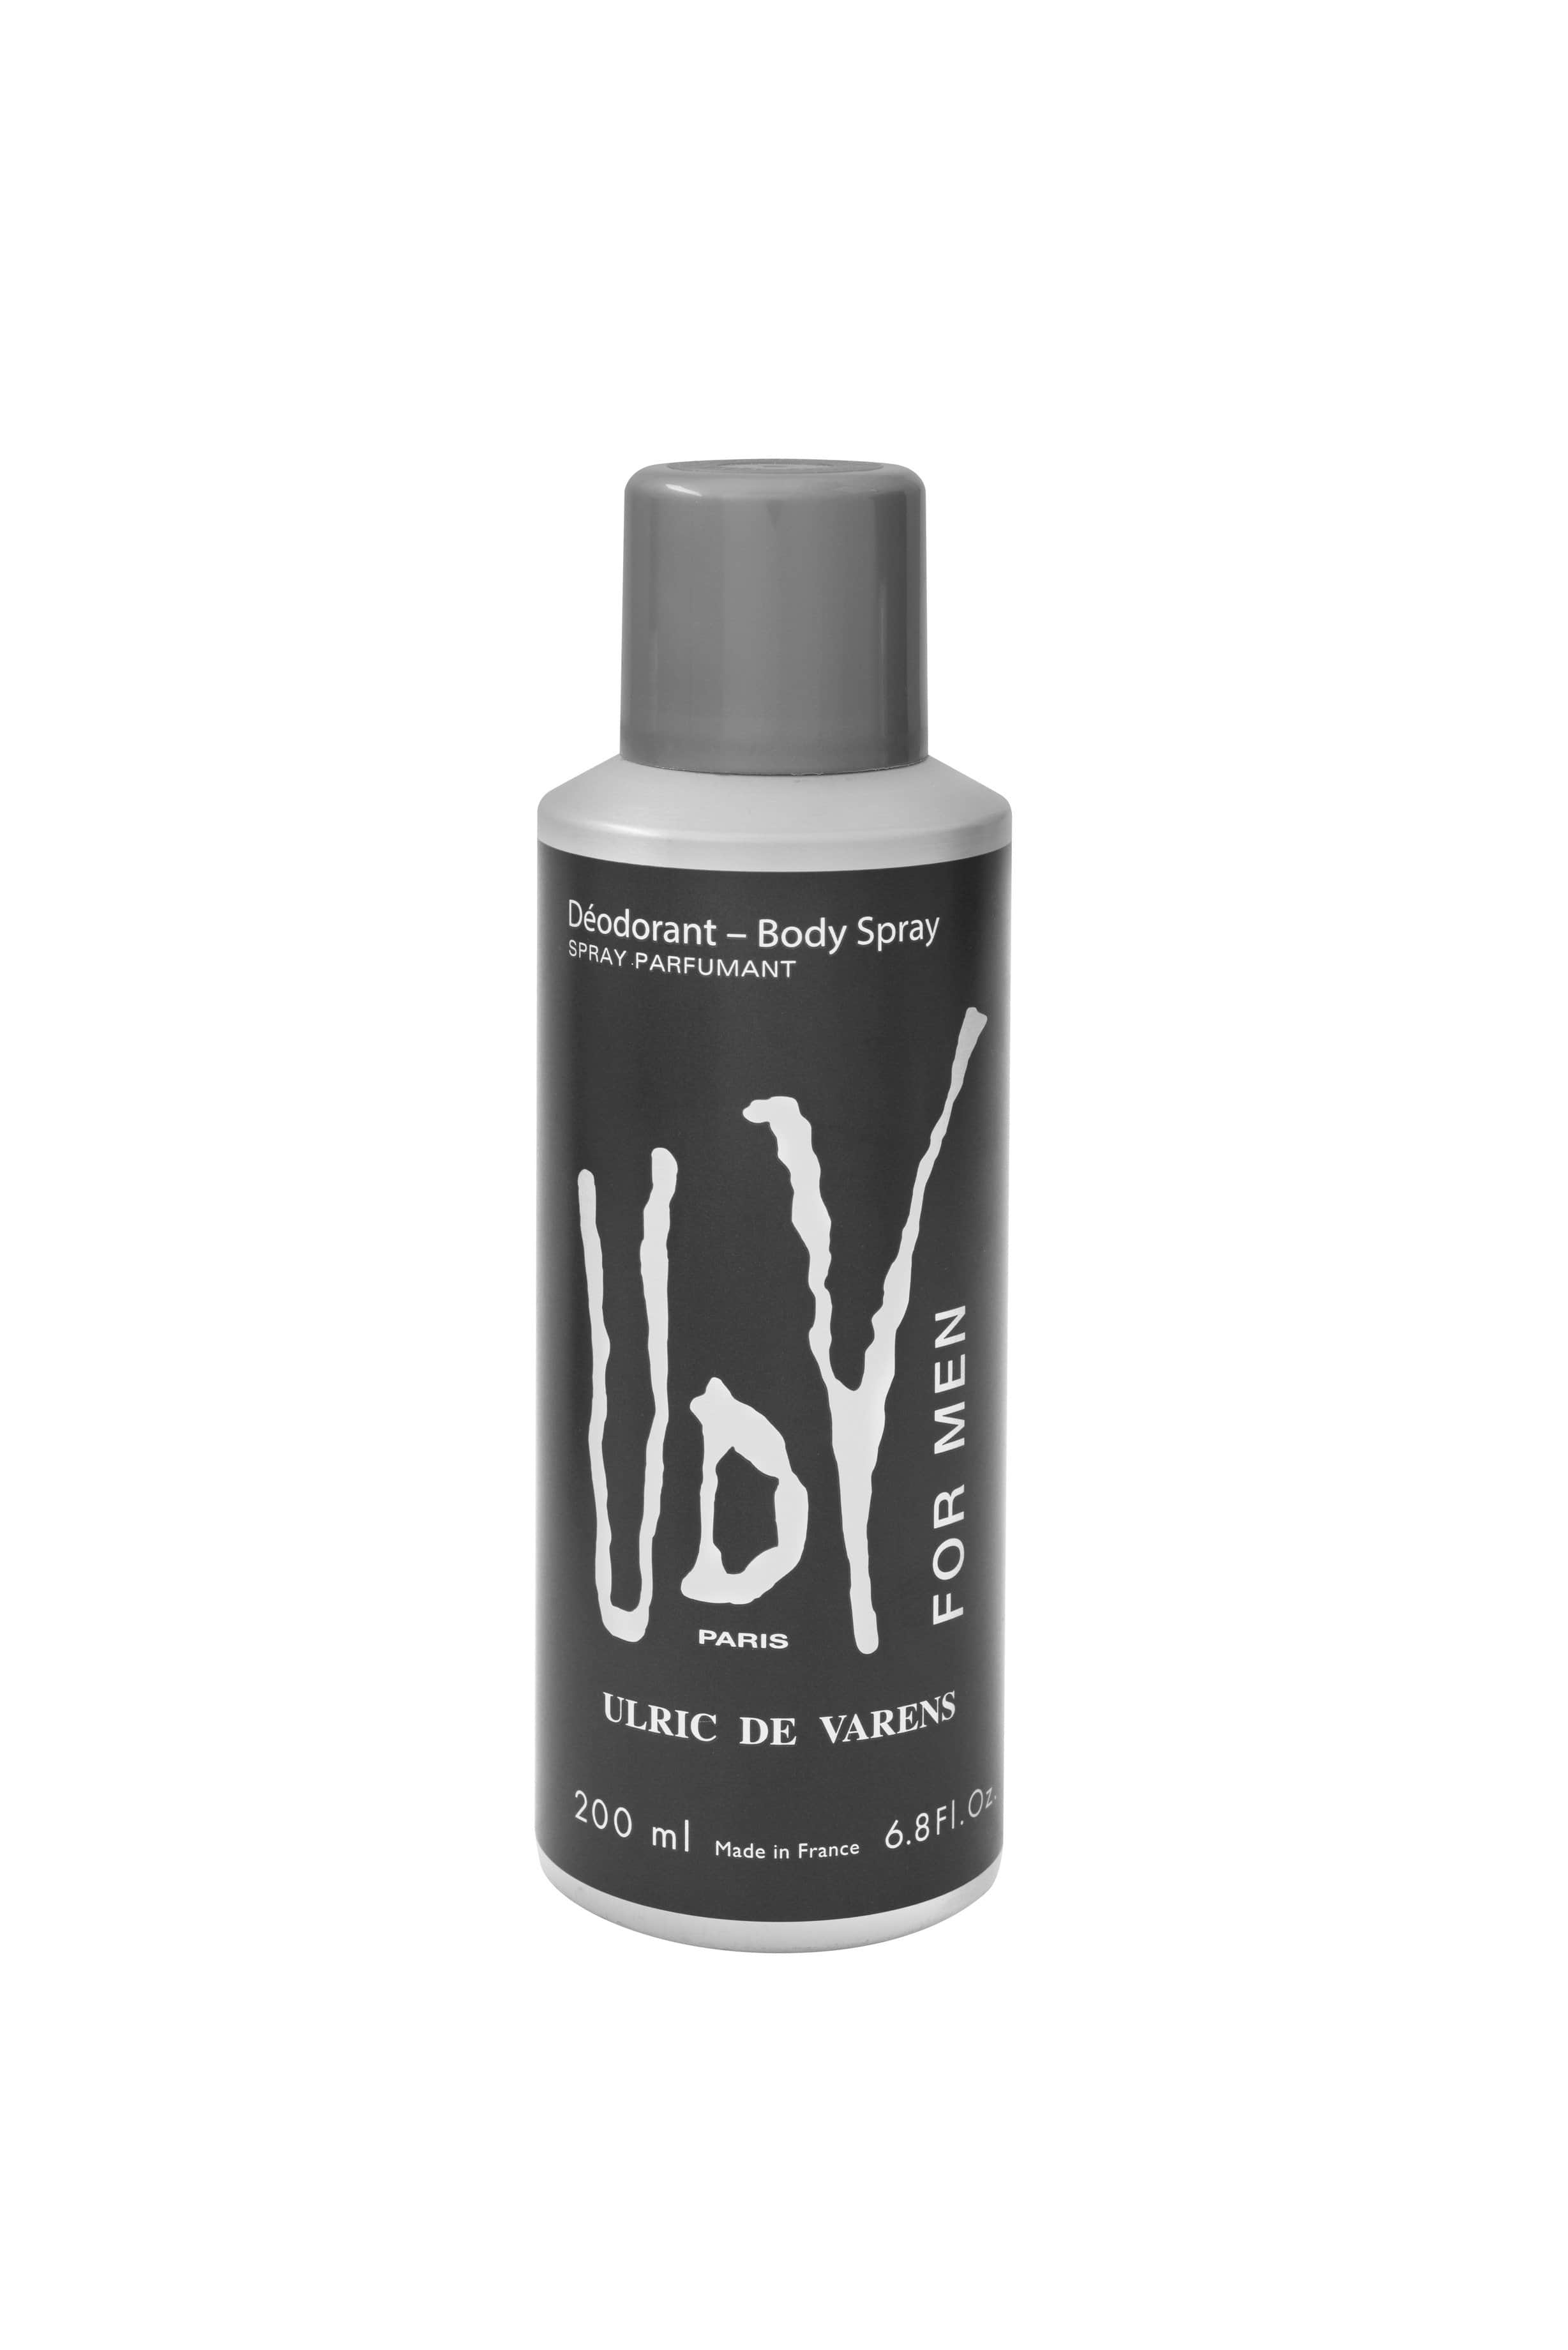 ULRIC DE VARENS FOR MEN Deodorant body spray 200 mlUDV3568 - Jashanmal Home